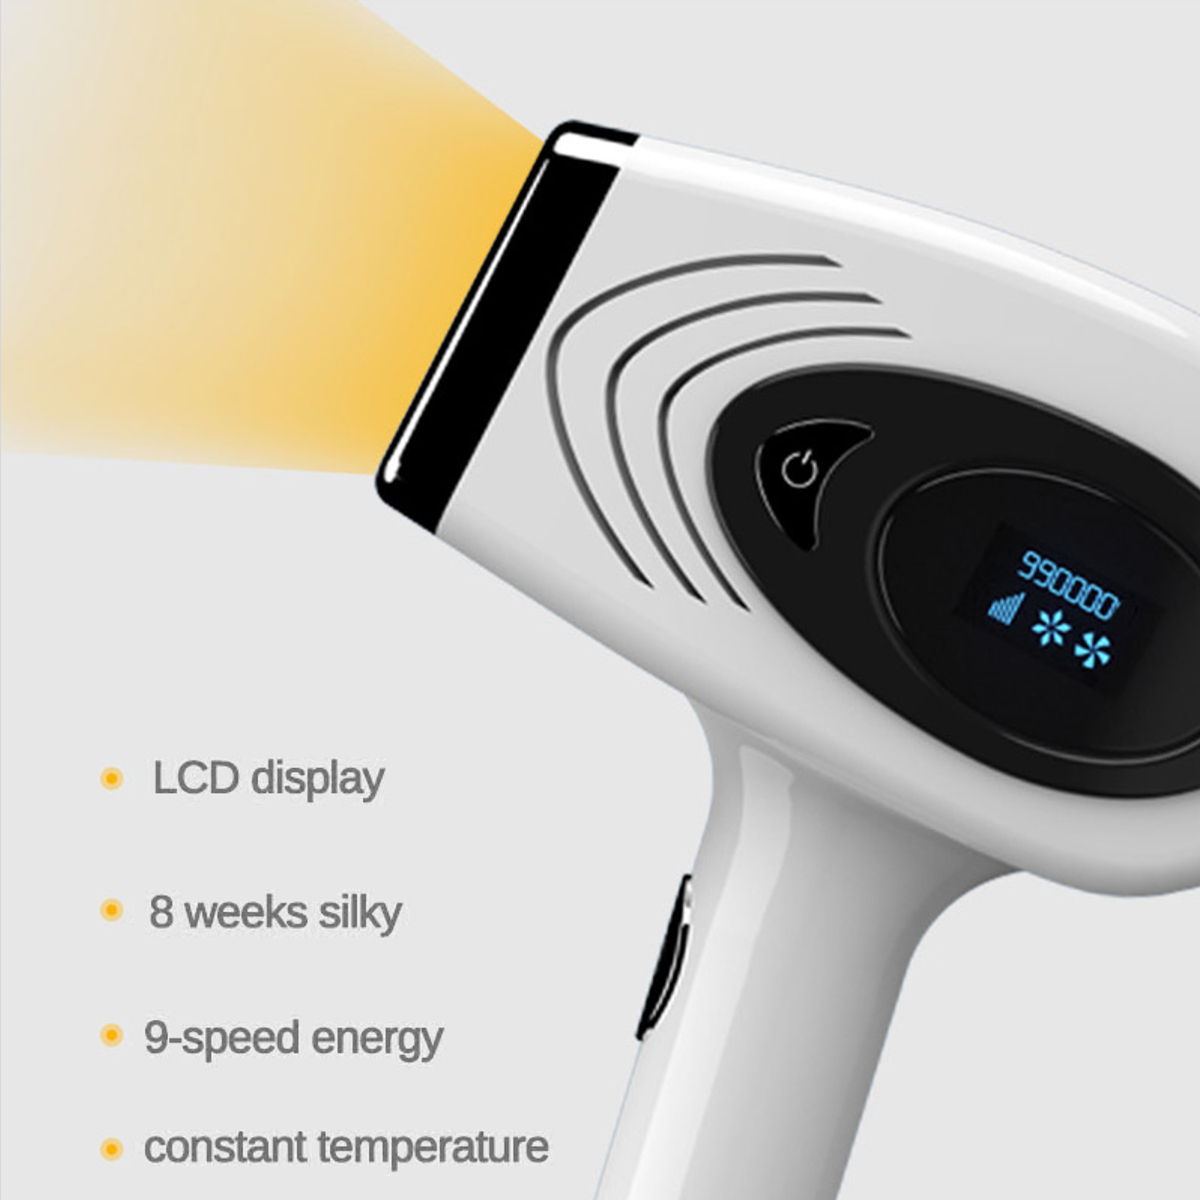 999999 Flashes 9 Level Portable Laser IPL Removal Machine Face Body Hair Shaving Epilator Kit